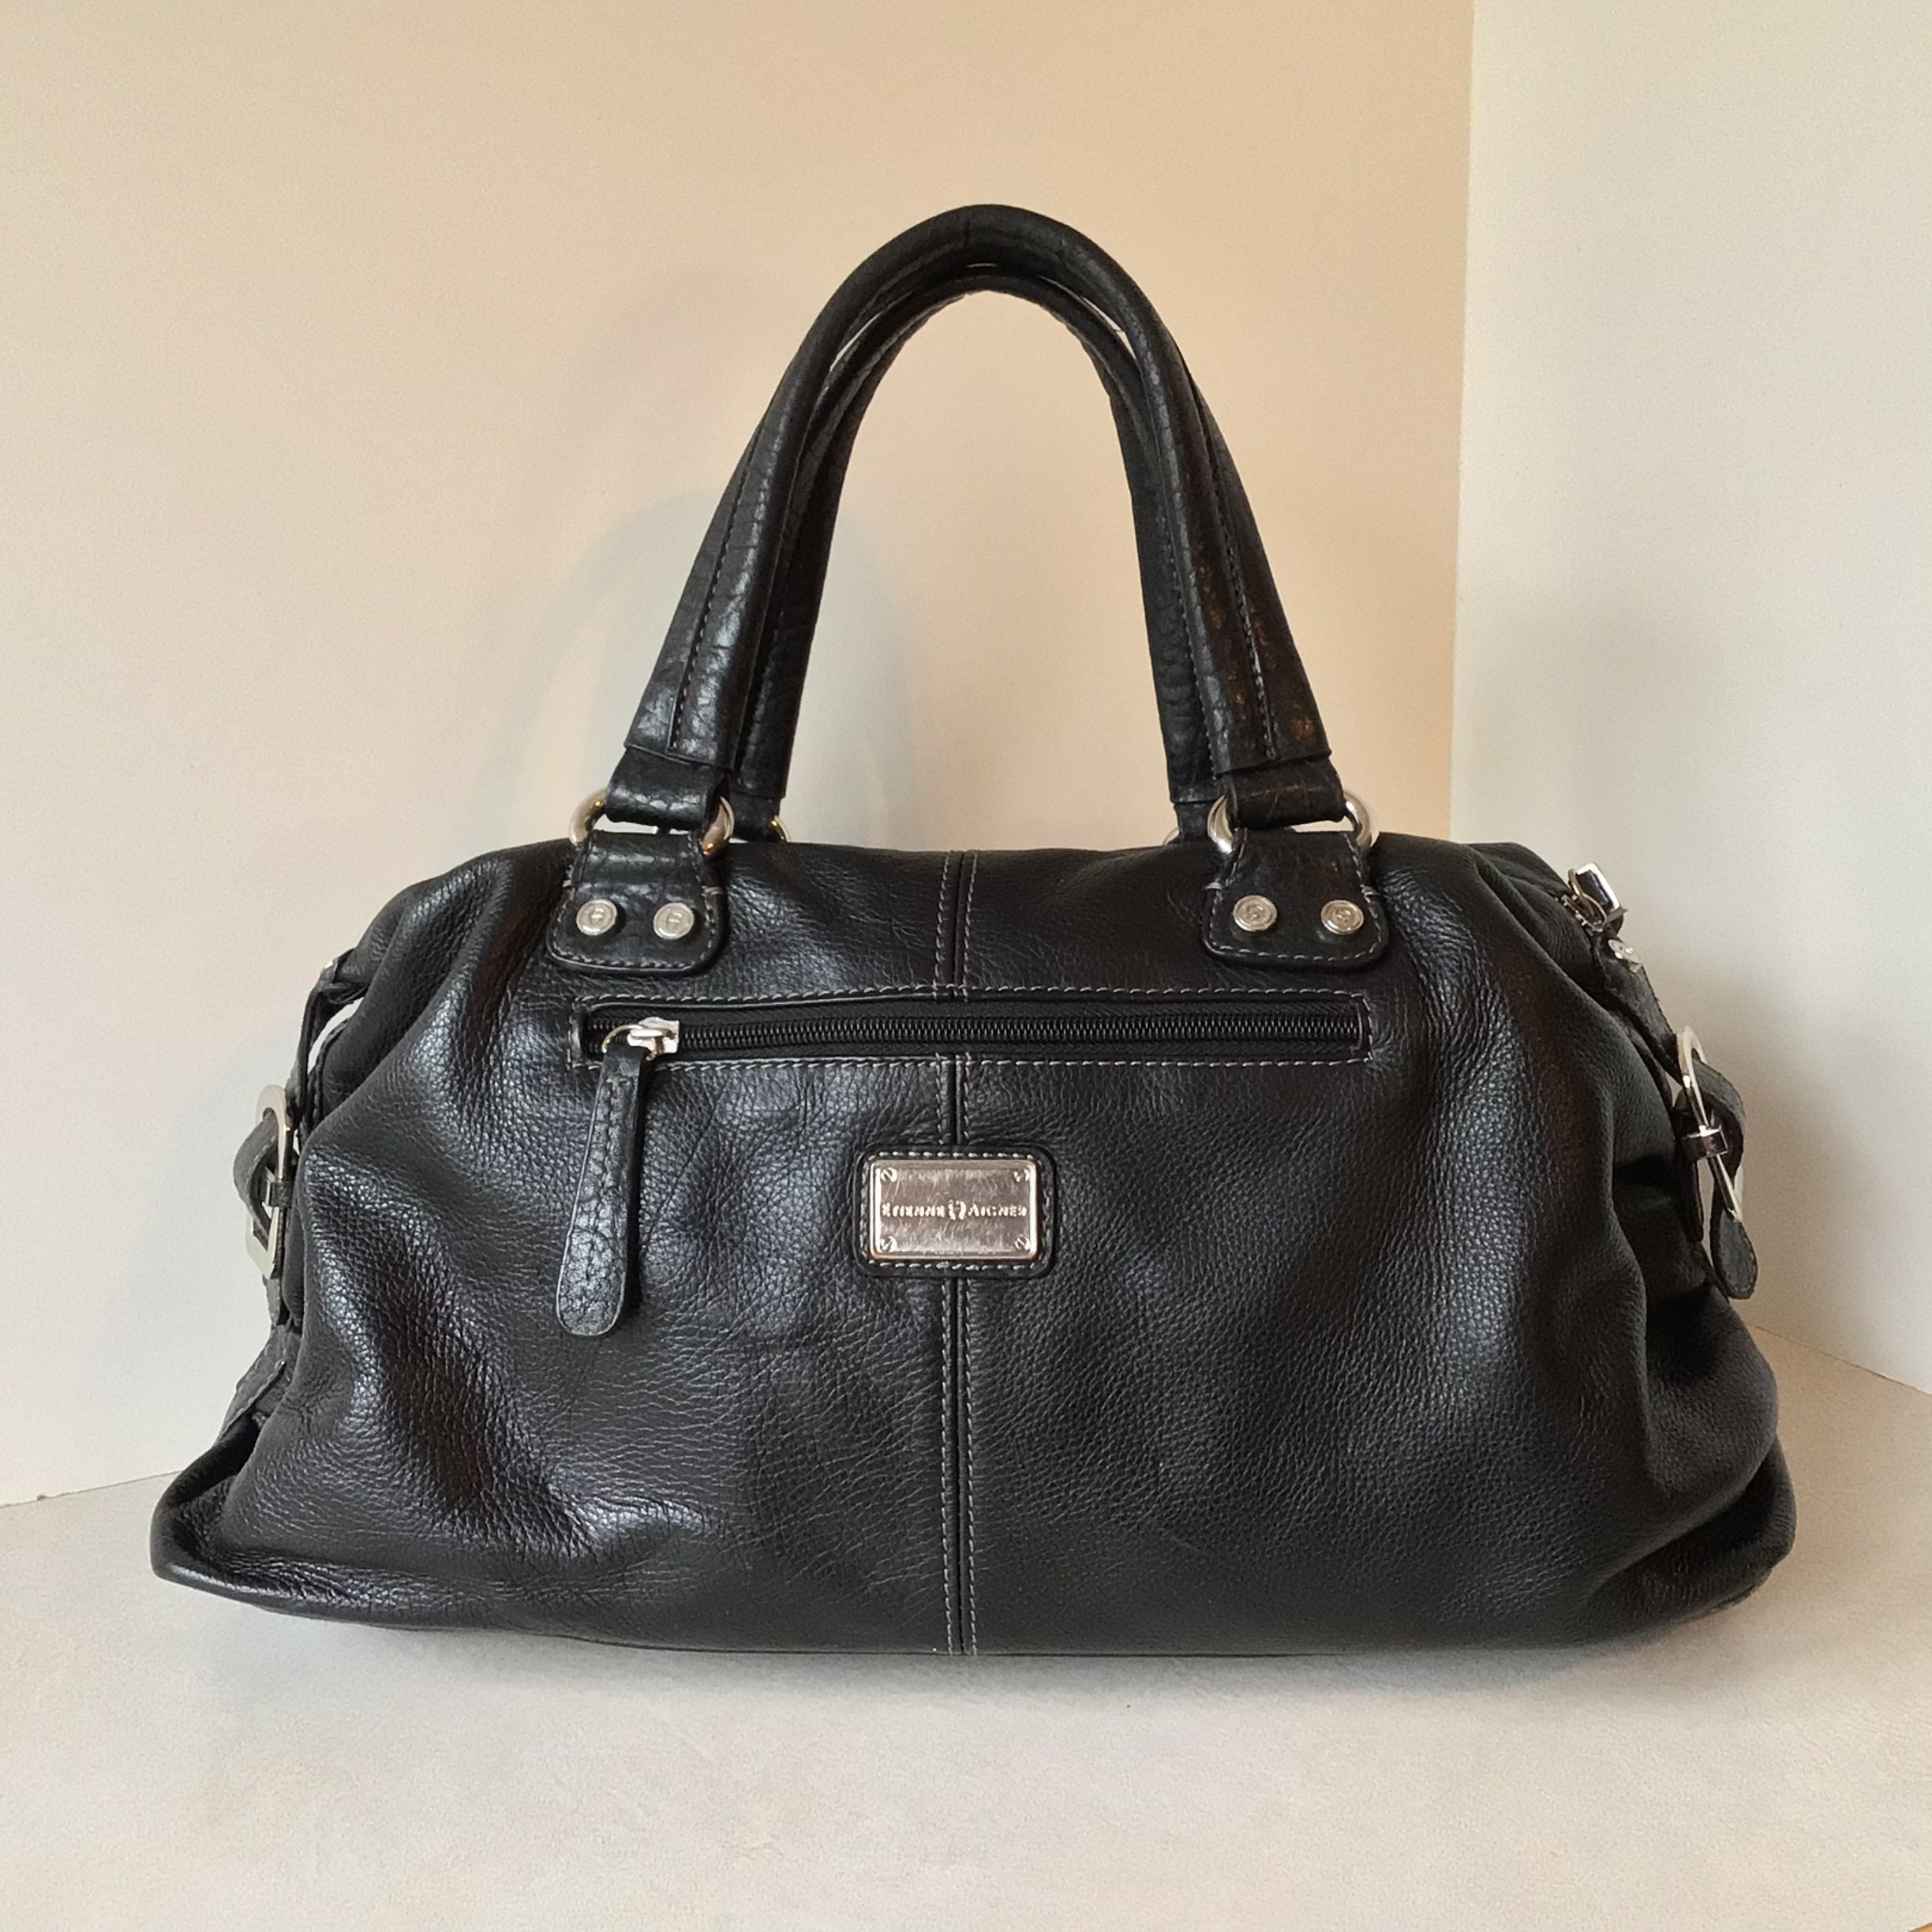 Etienne Aigner Black Leather Handbag | Etsy